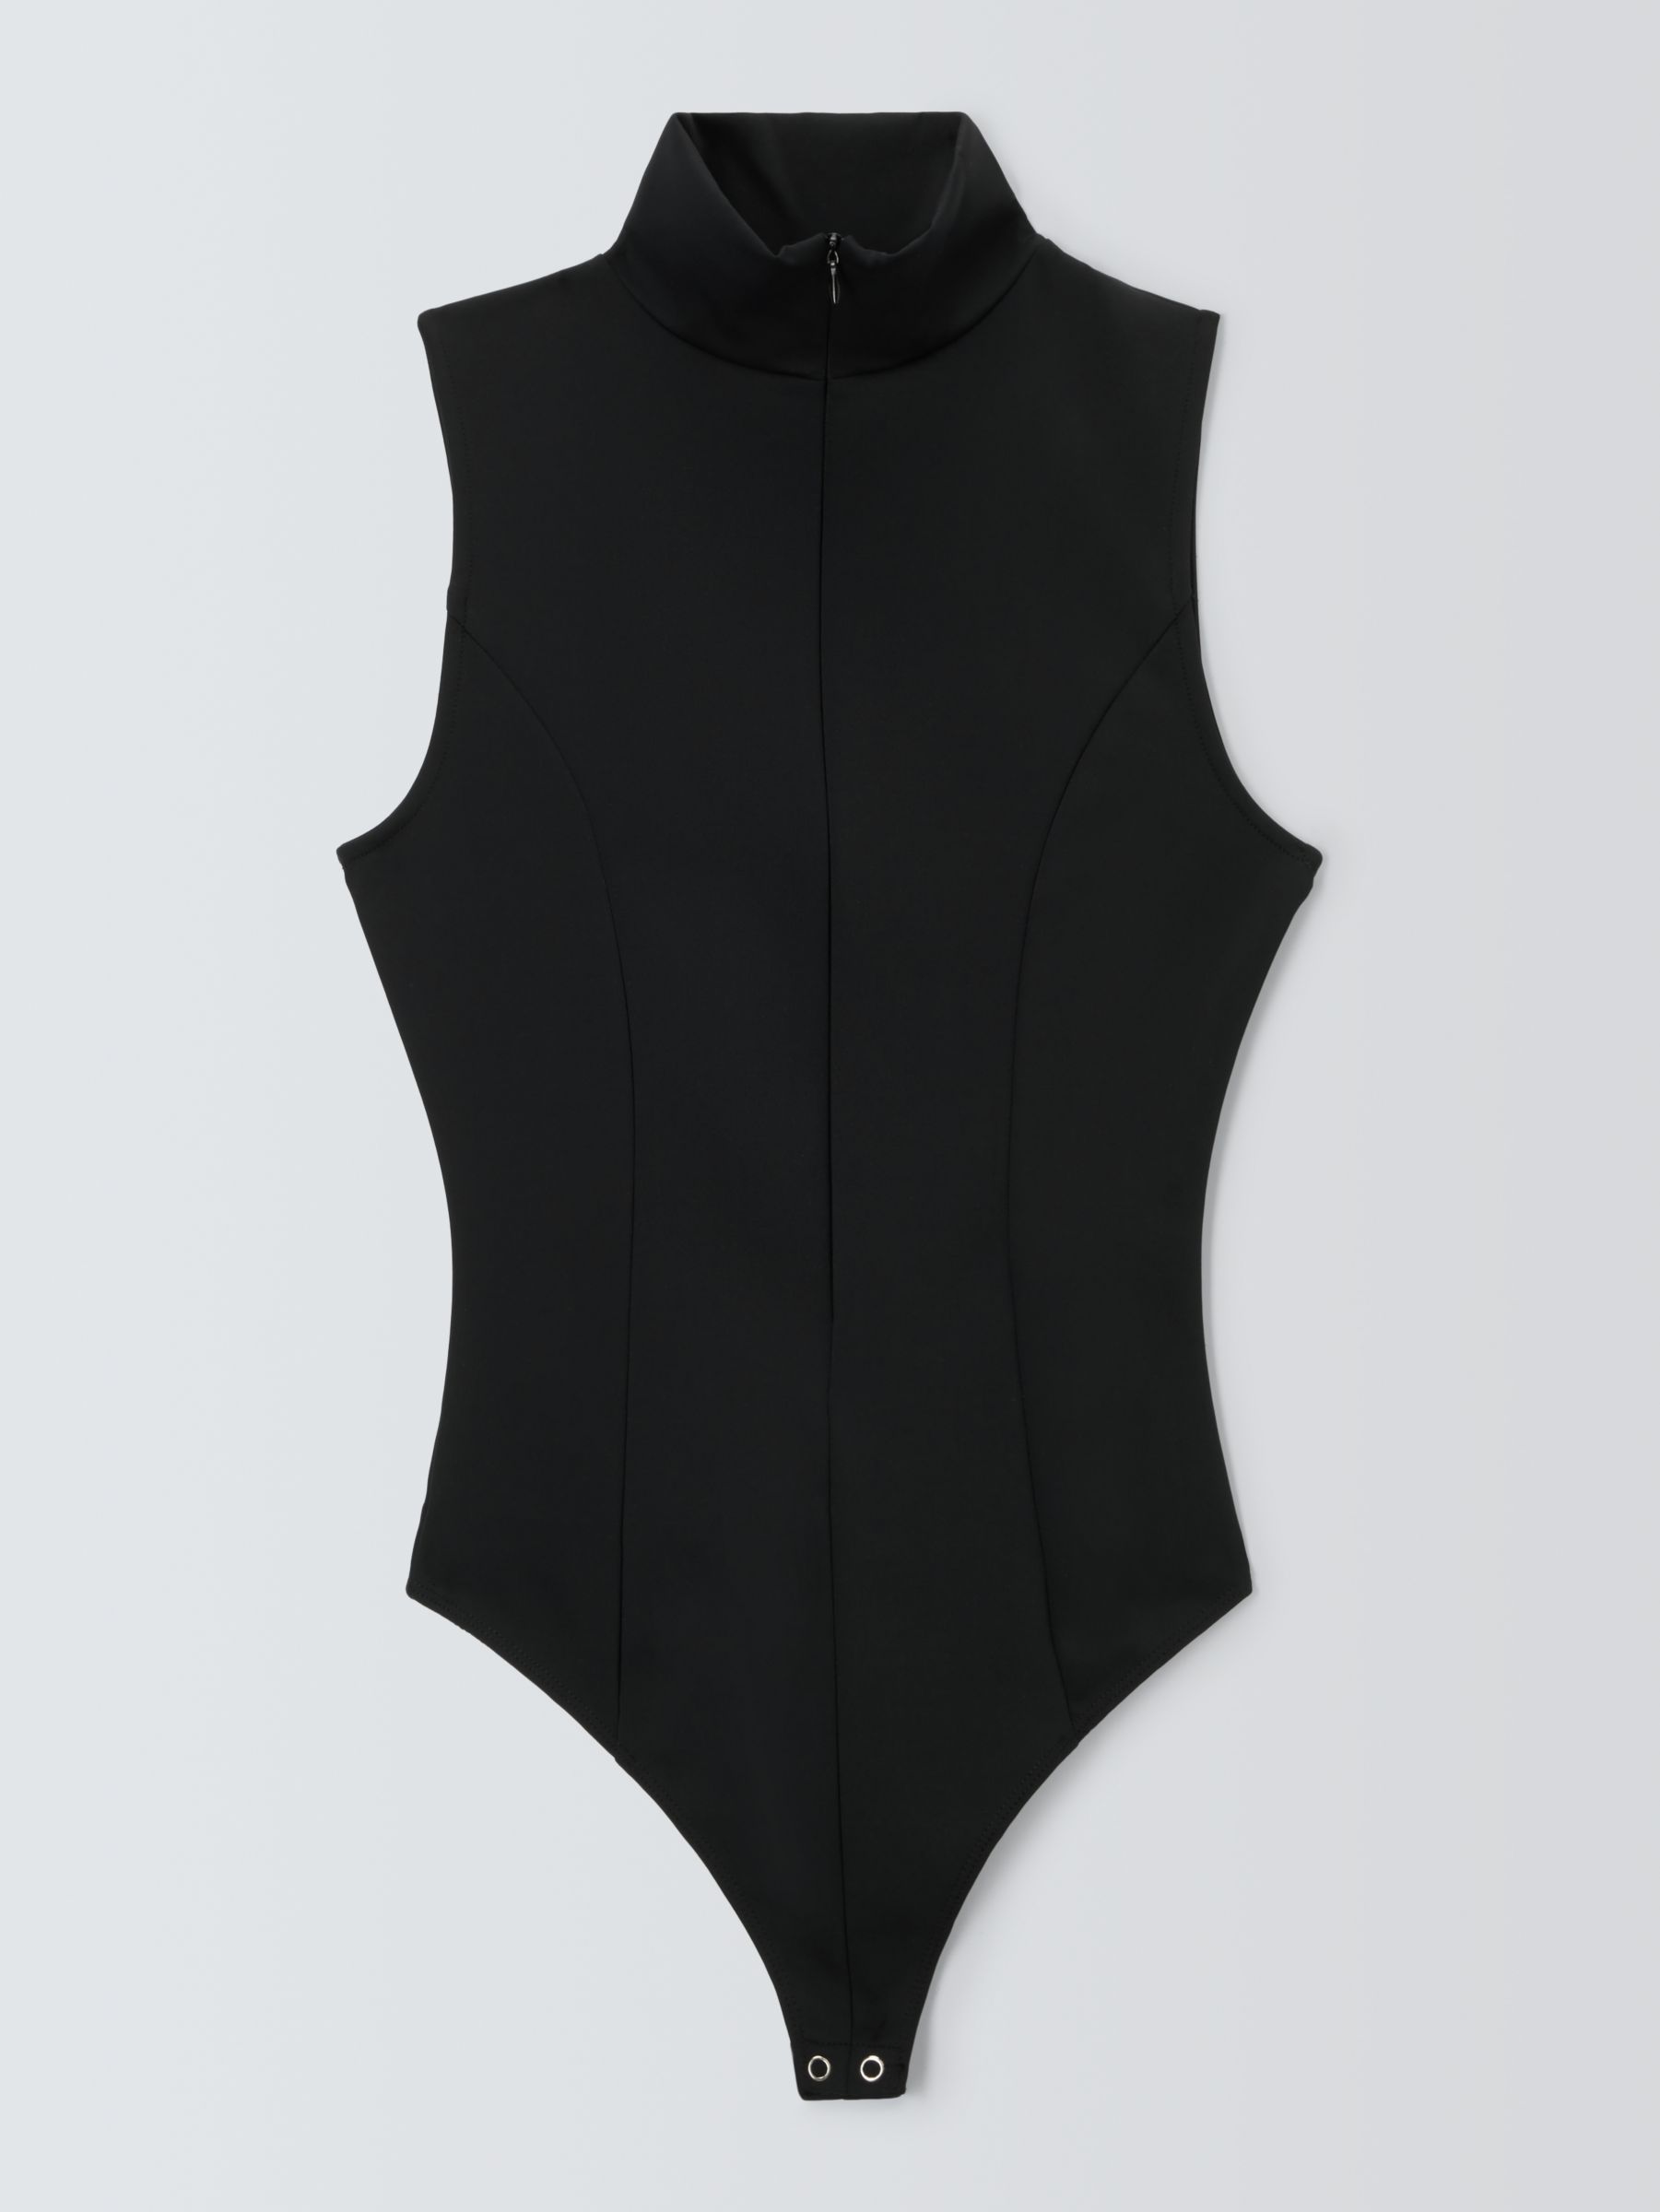 Sleeveless Bodysuit - Black And Cream.